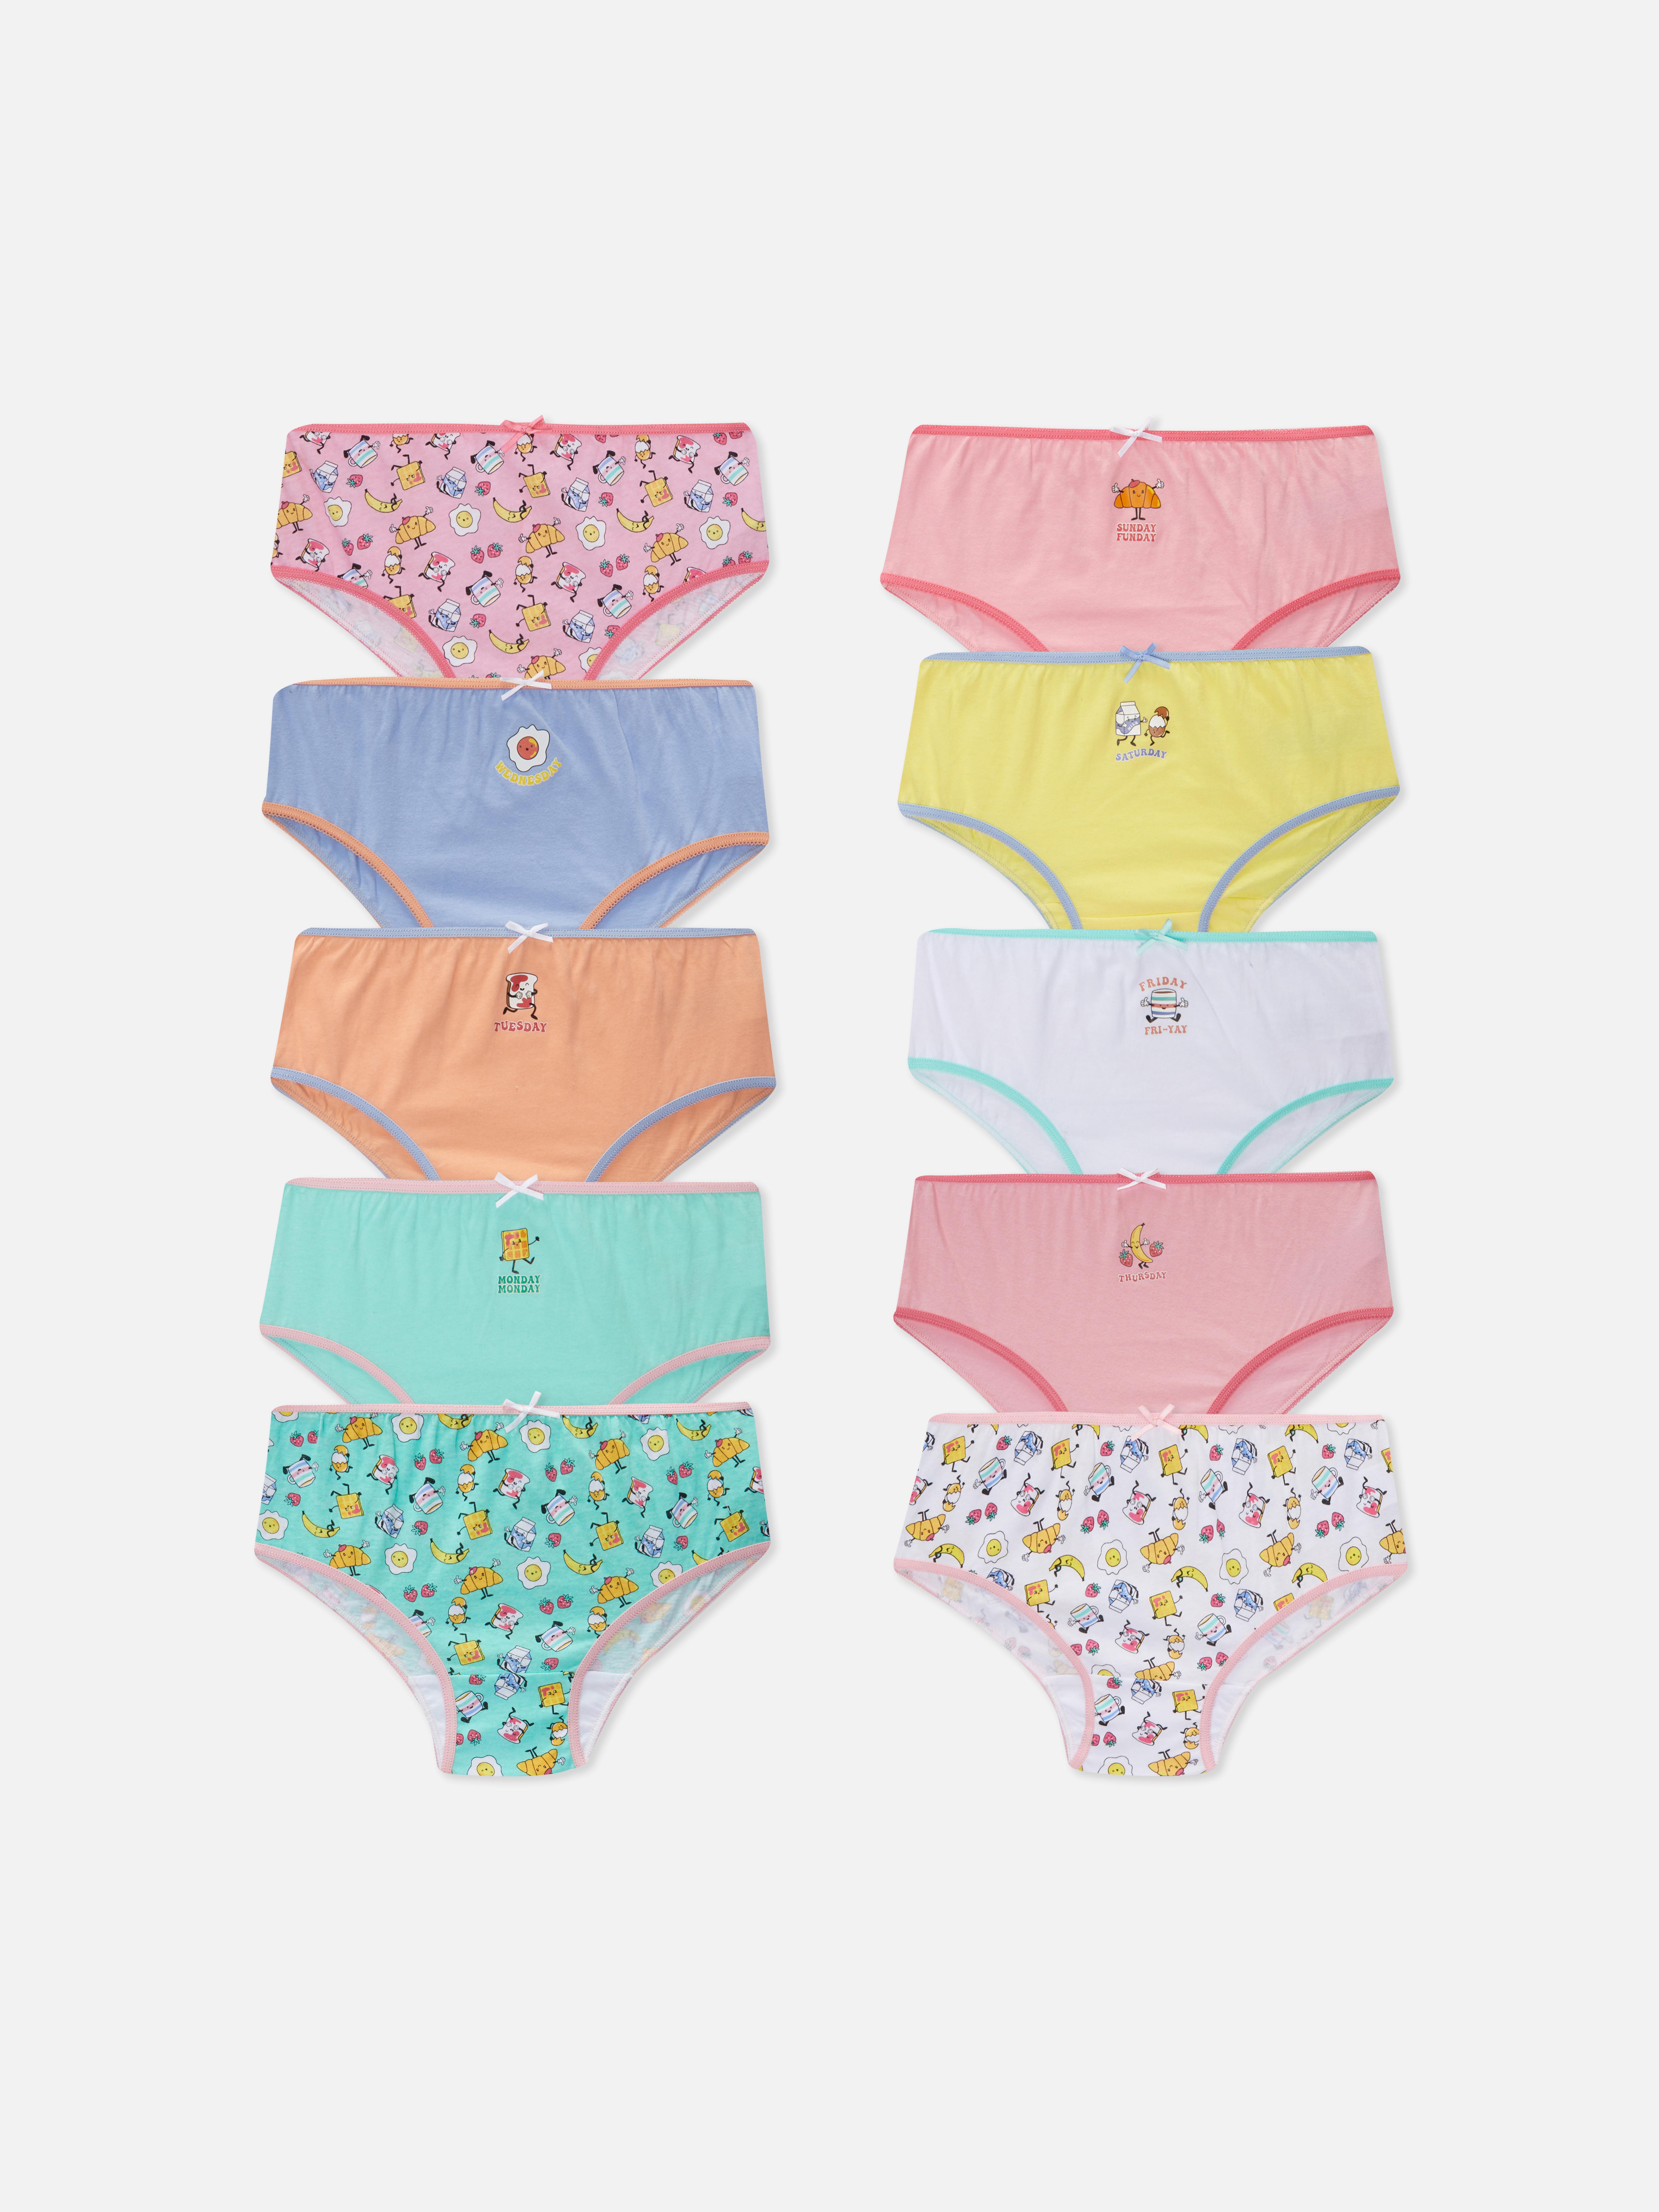 Shop Primark 2015-16FW Underwear by ５月のひまわり